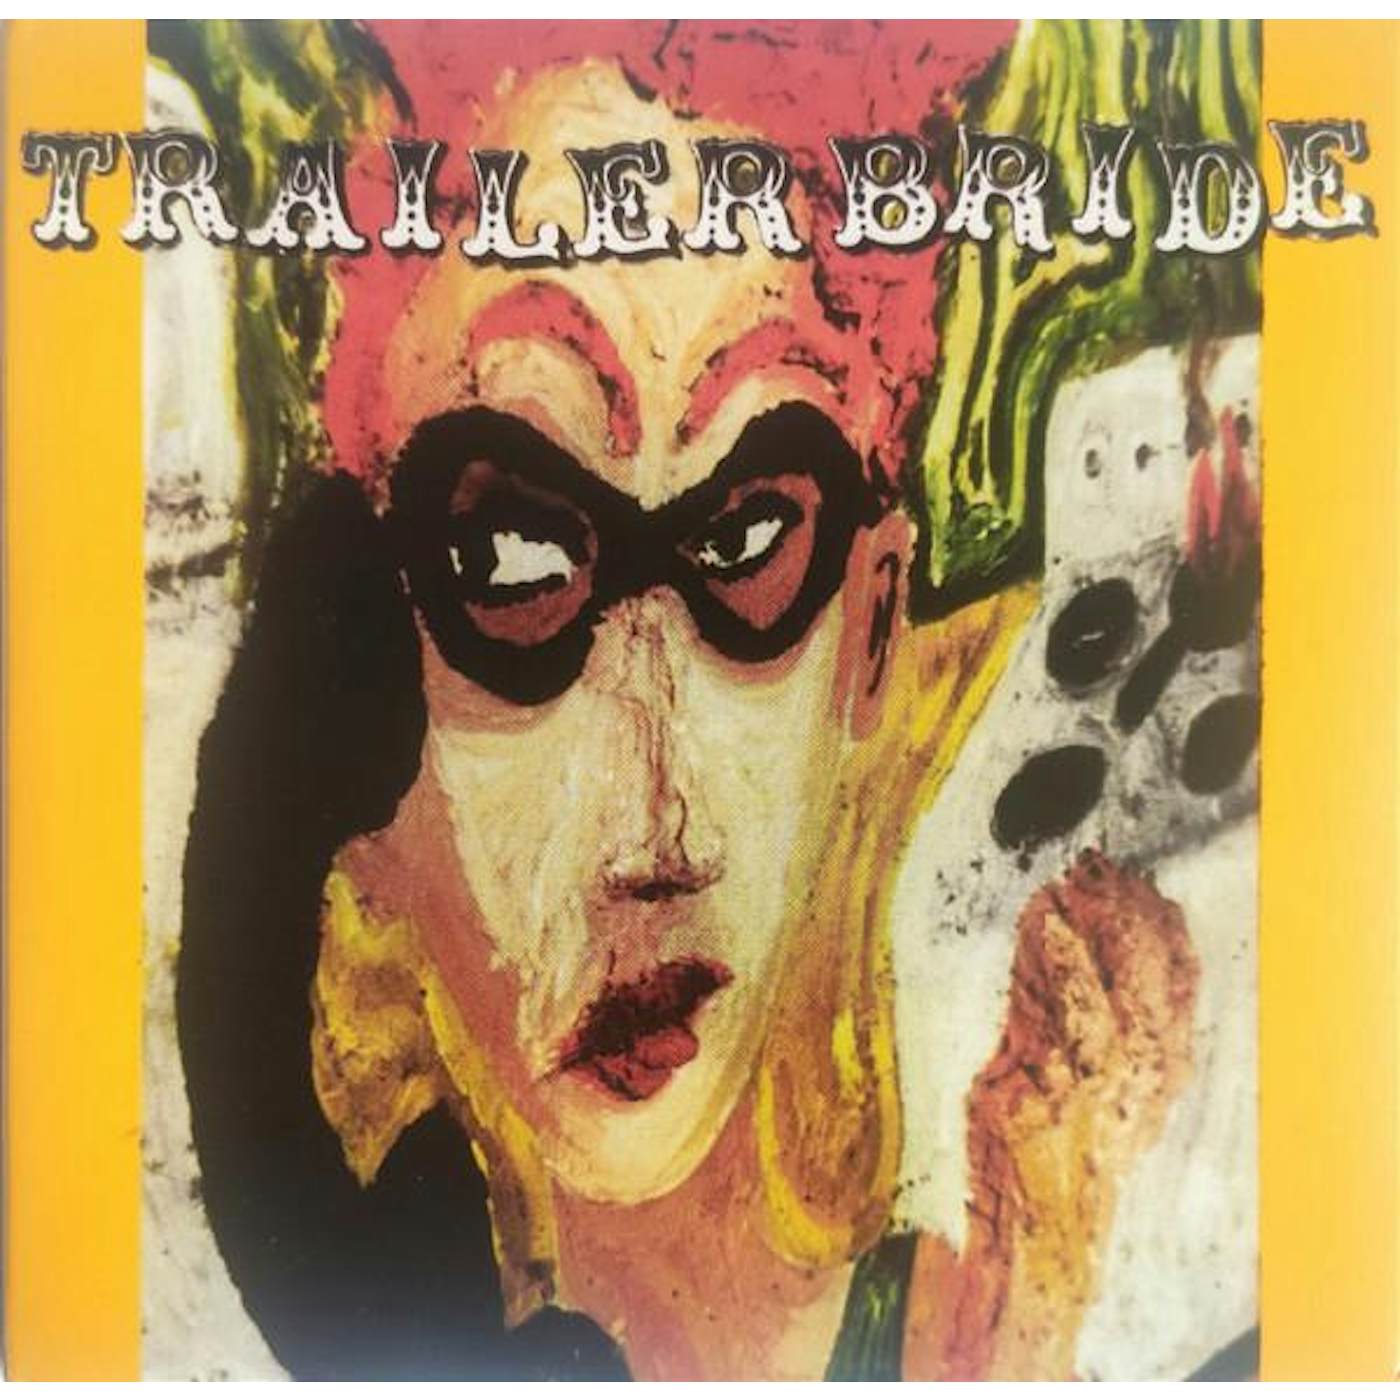 TRAILER BRIDE (25TH ANNIVERSARY) (RSD) CD